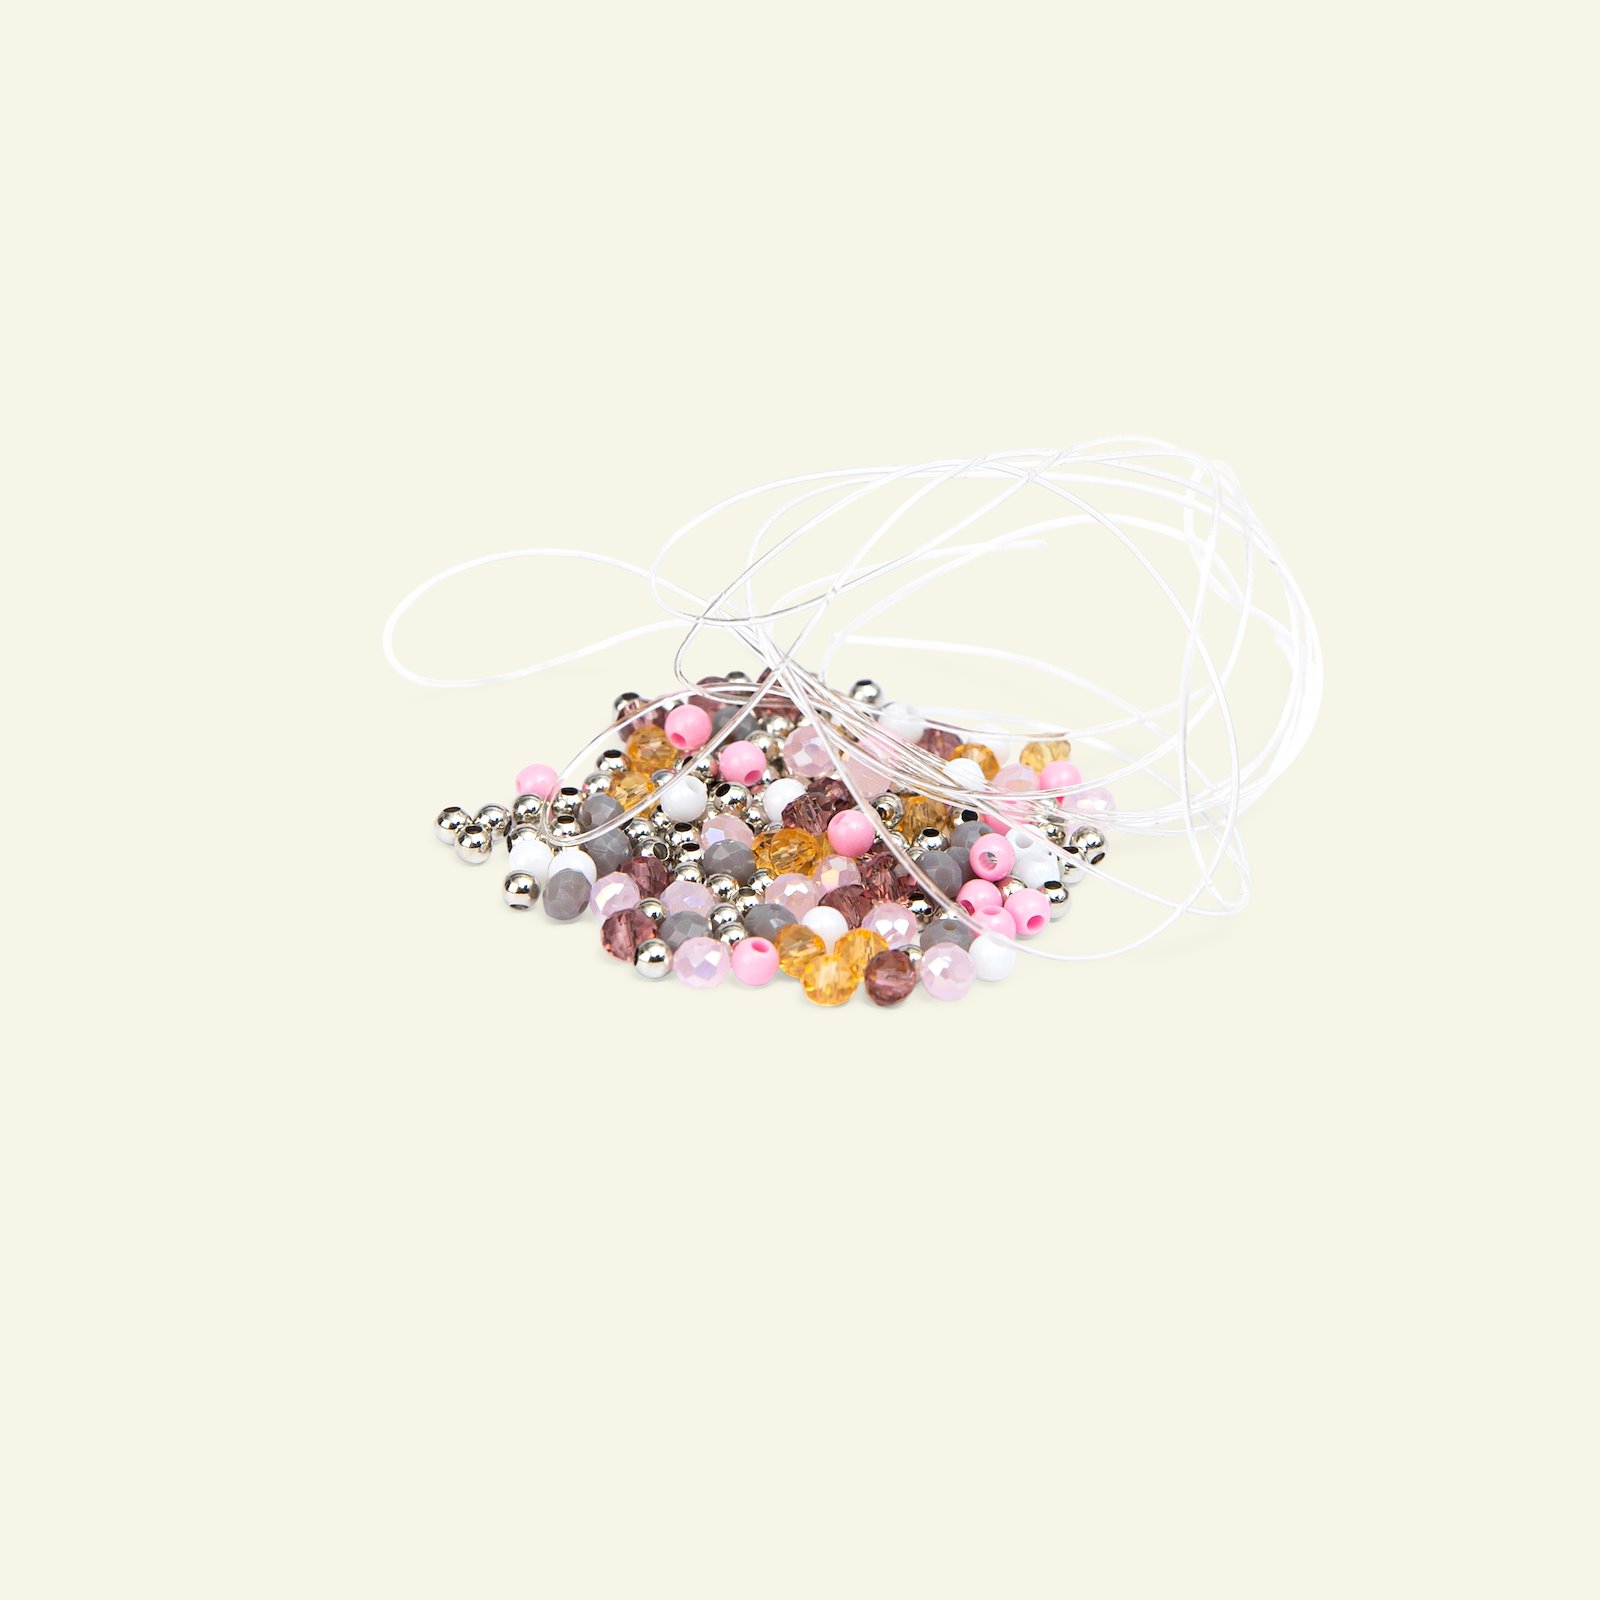 Kit bracelet beads rose/silver col mix 26906_pack_b